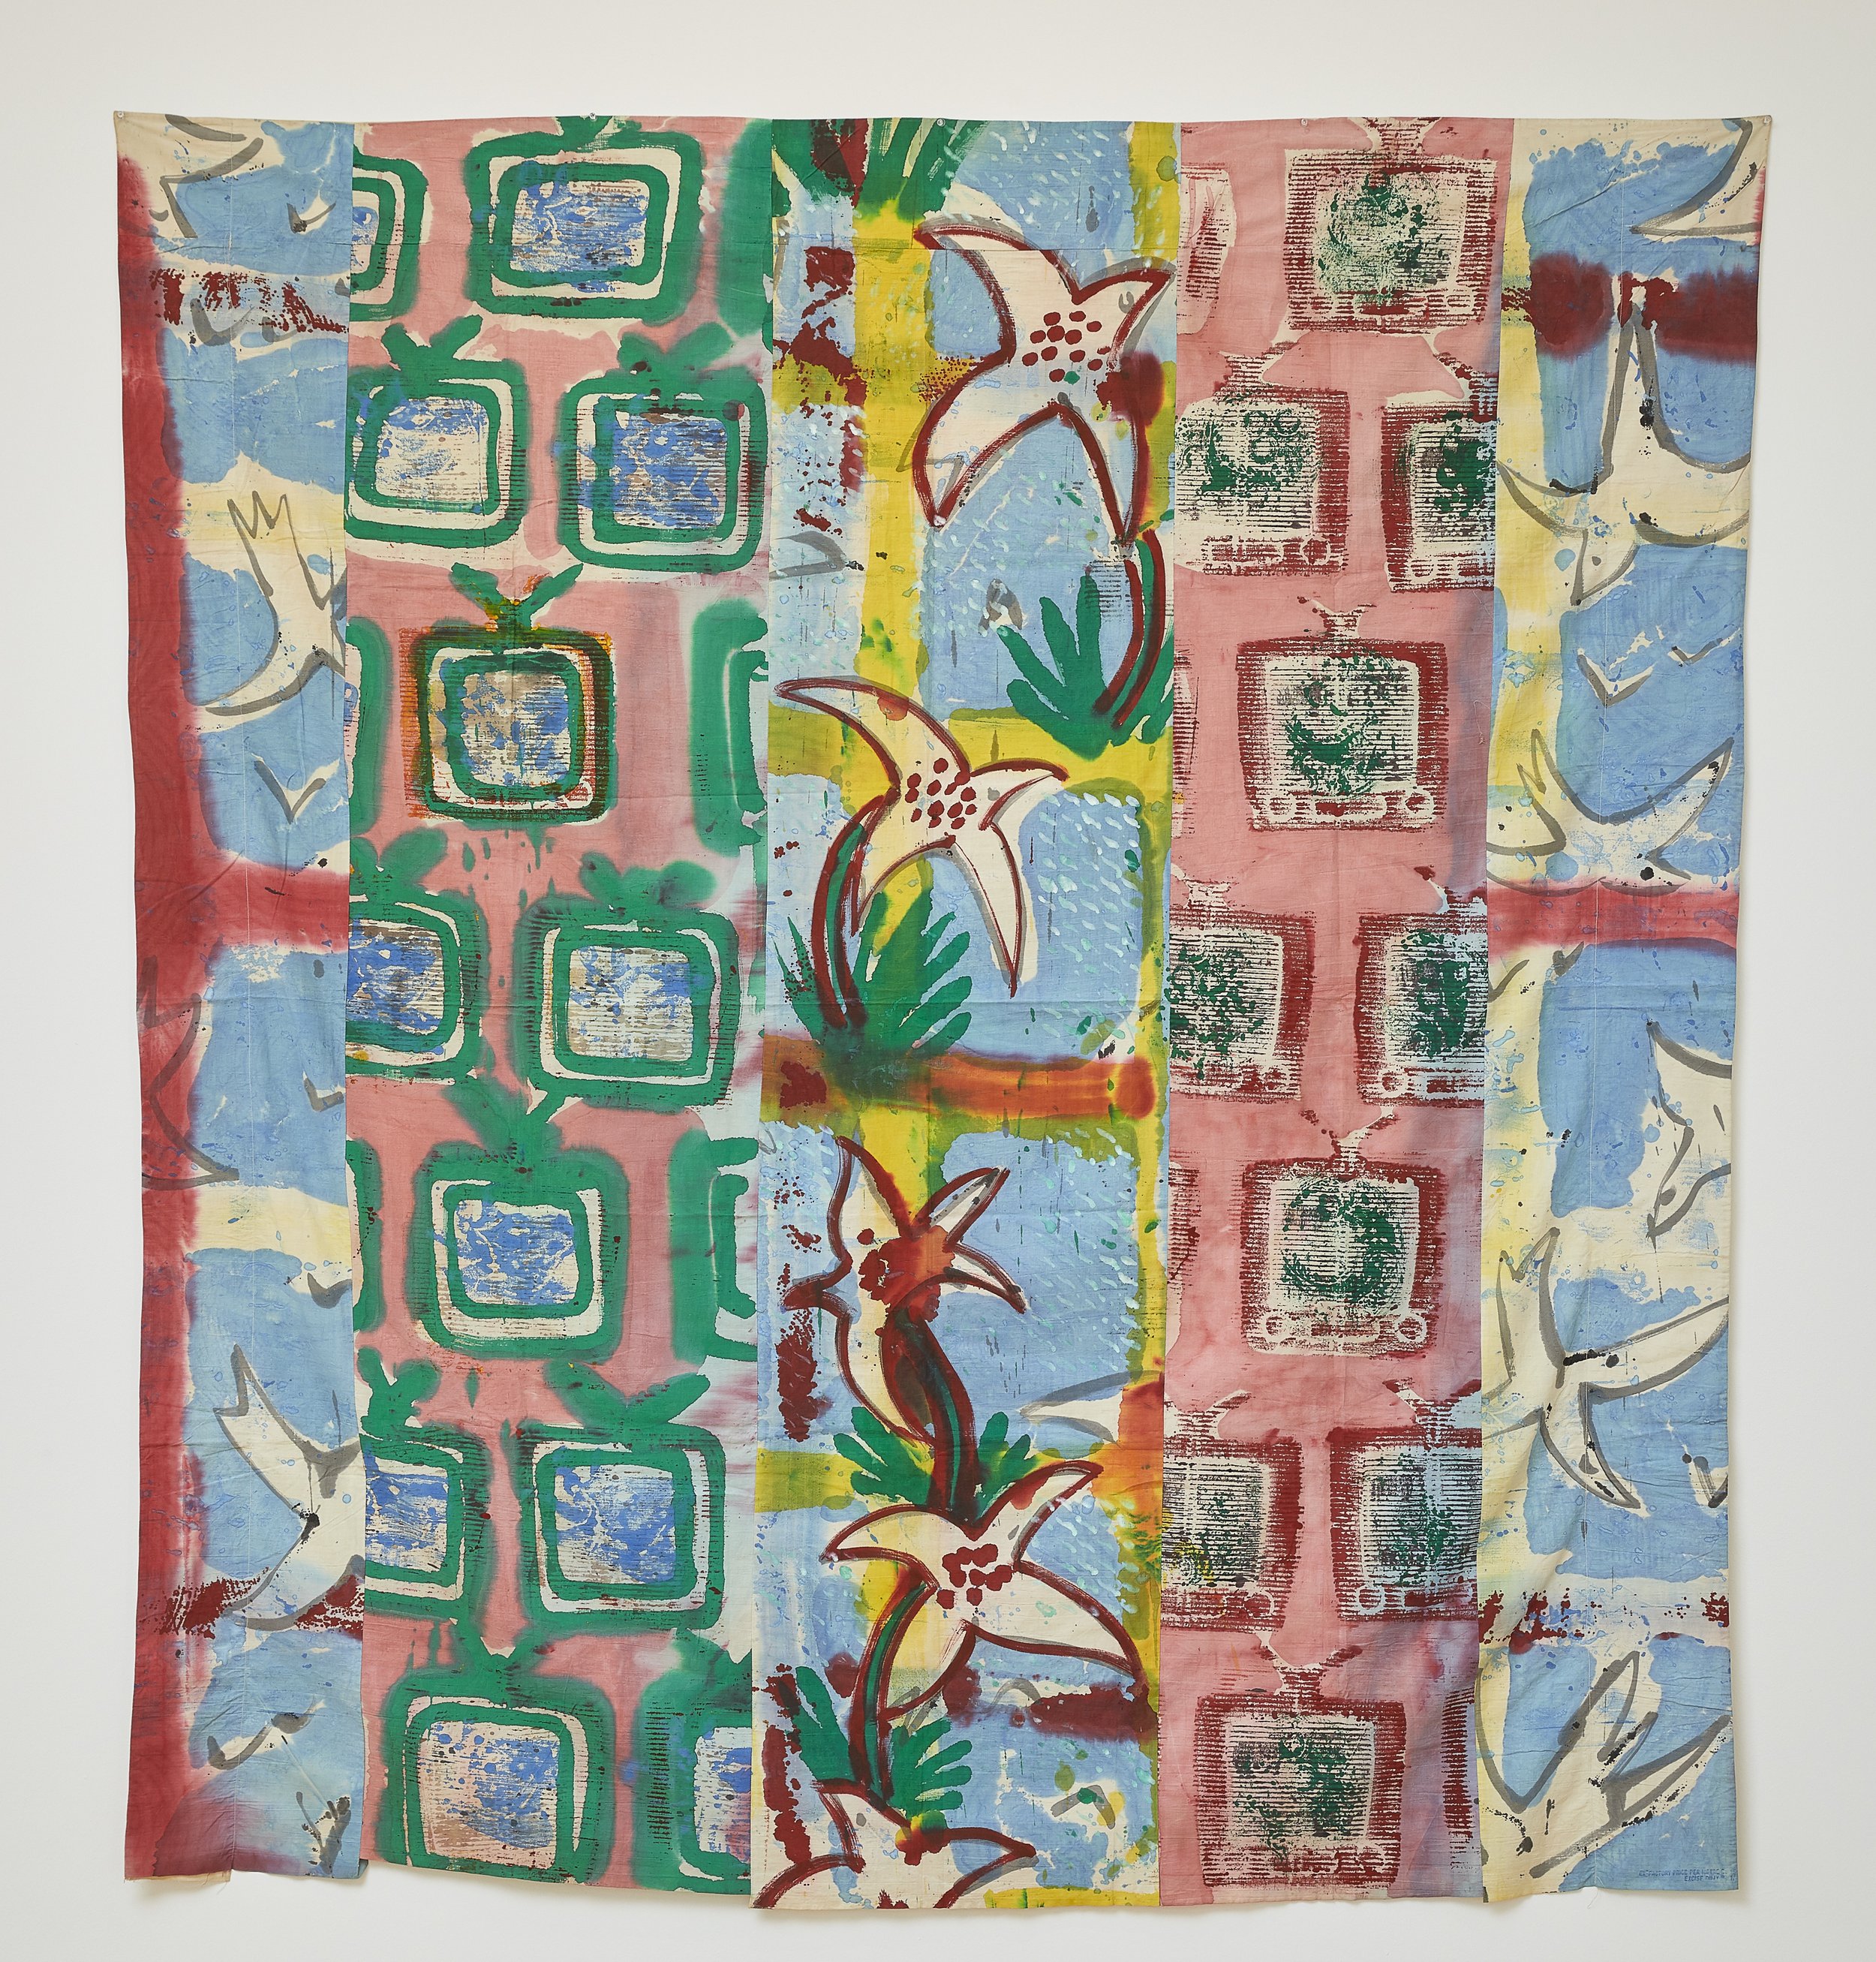  Kim MacConnel,  Chicken Delight , 1978. Acrylic on cotton. 83 x 77 inches. 